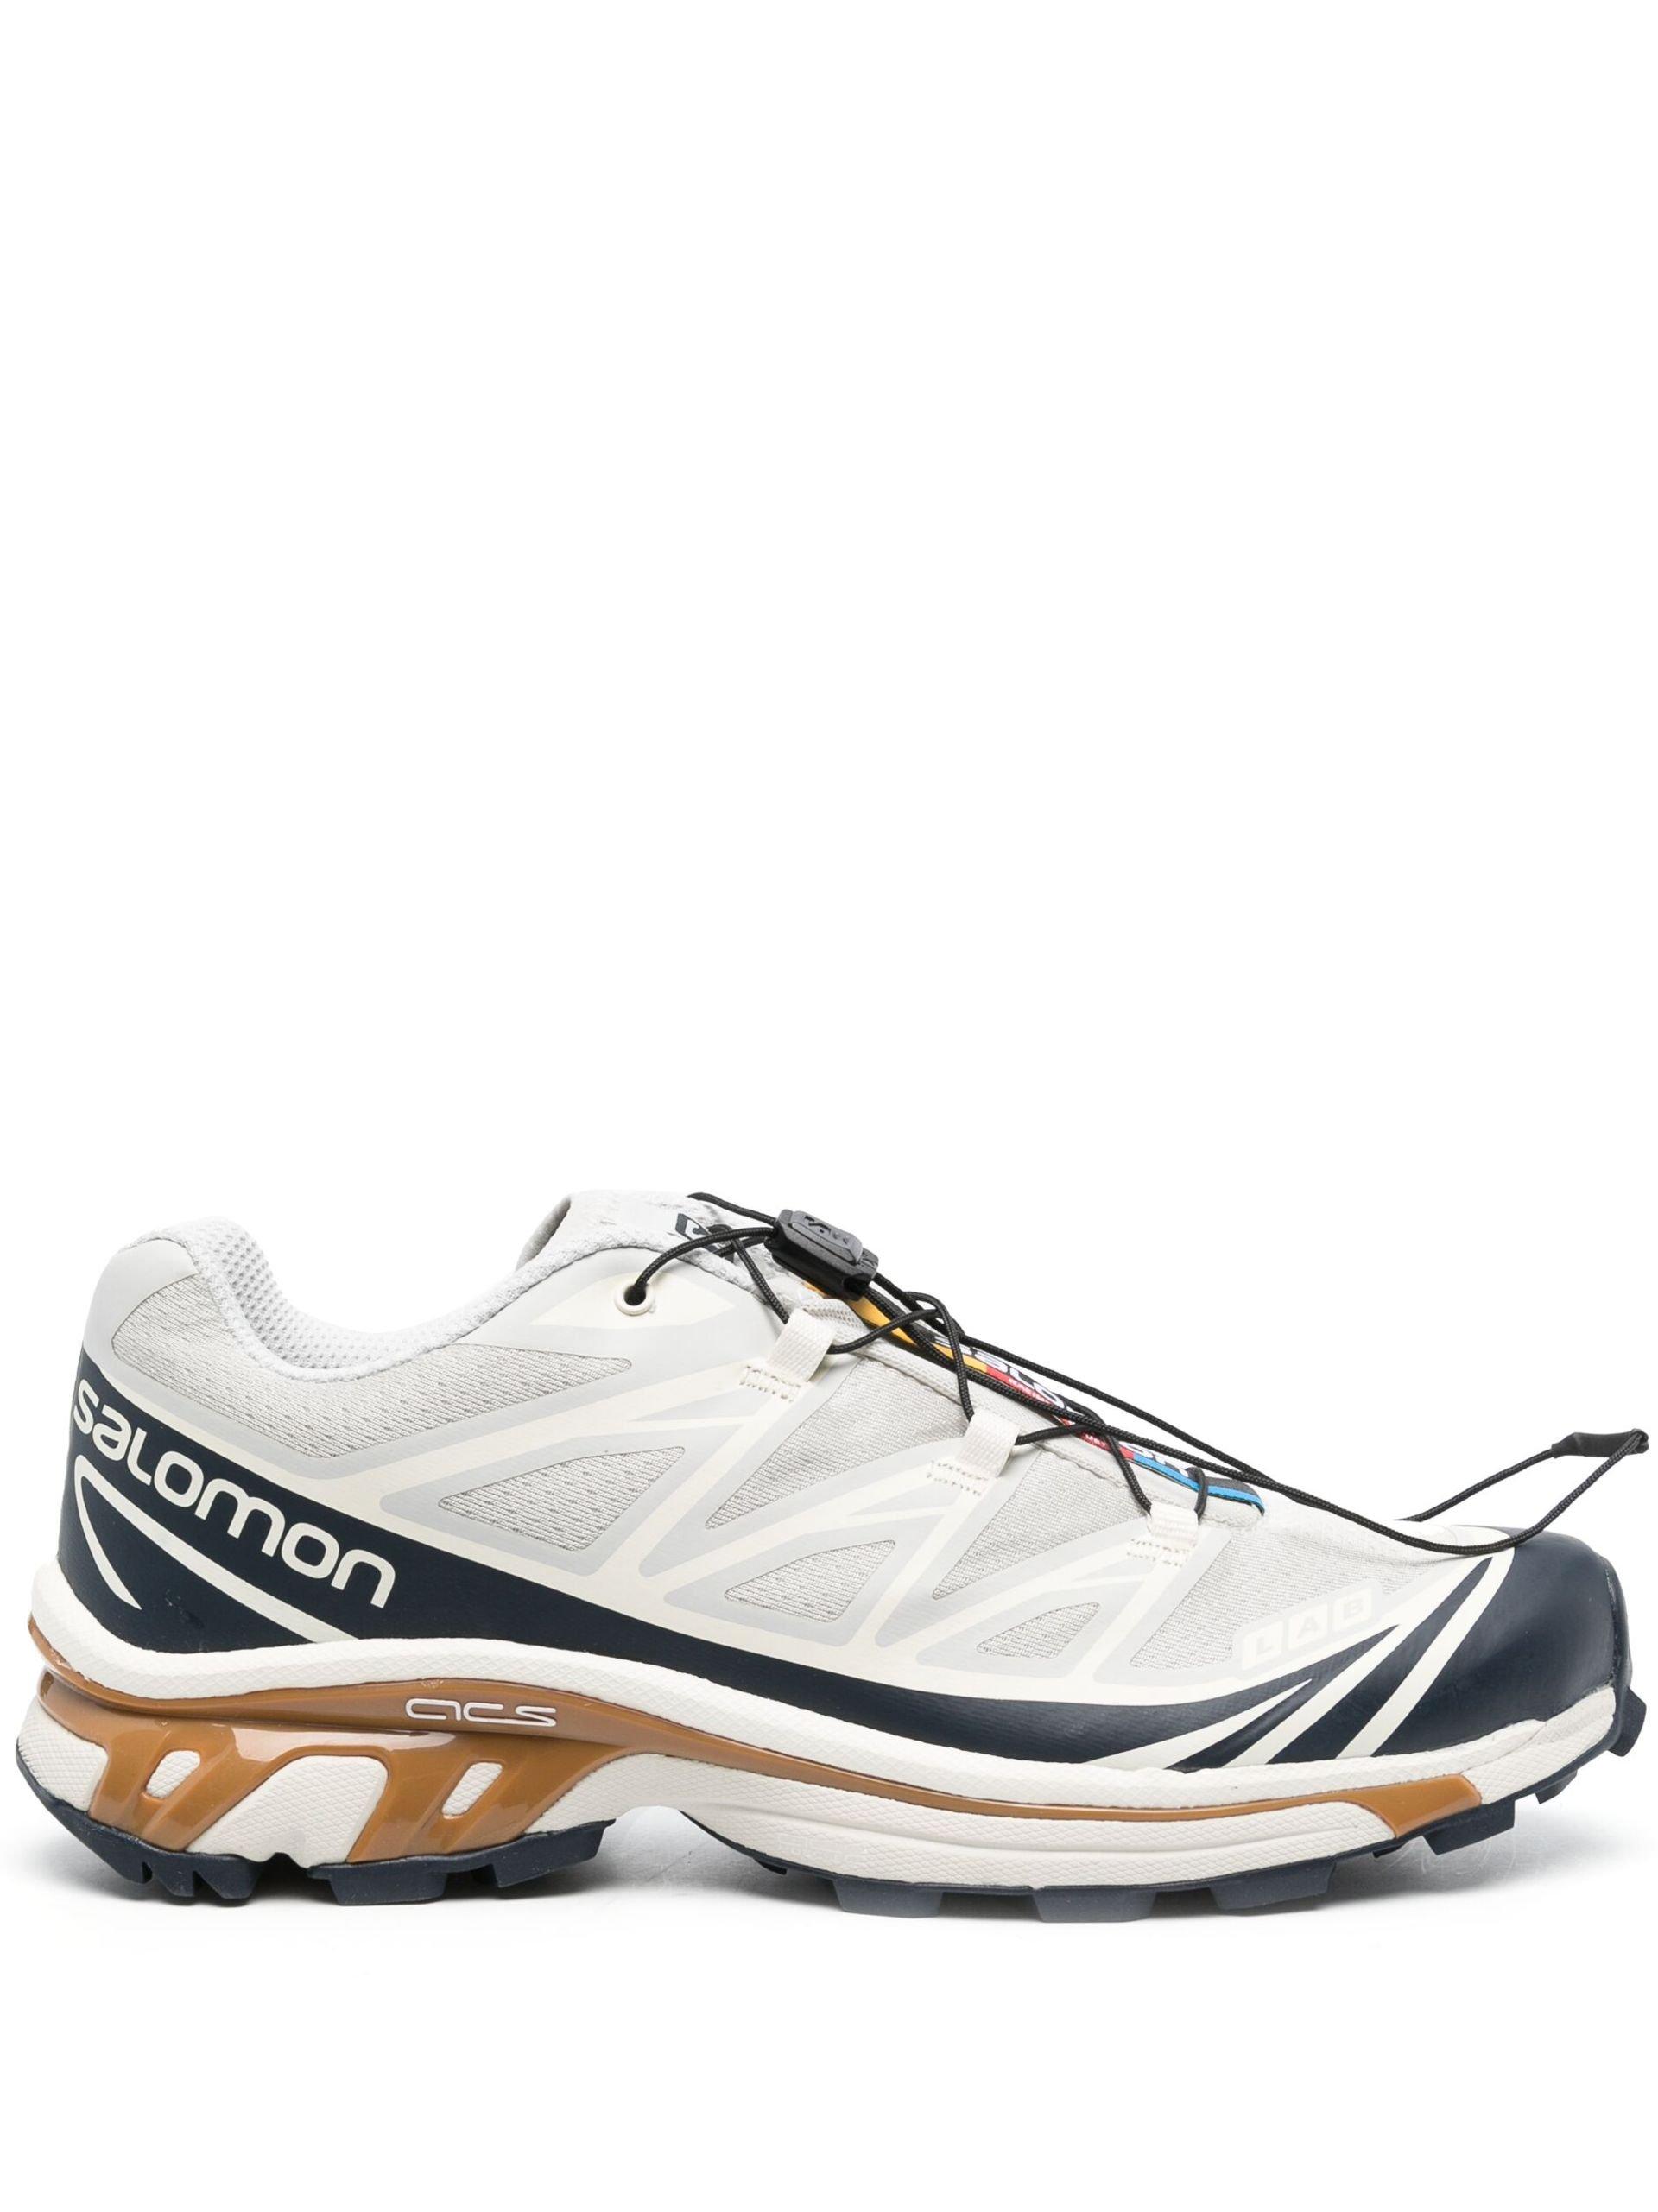 Salomon Xt-6 Advanced Running Sneakers - Women's - Fabric/rubber in White |  Lyst